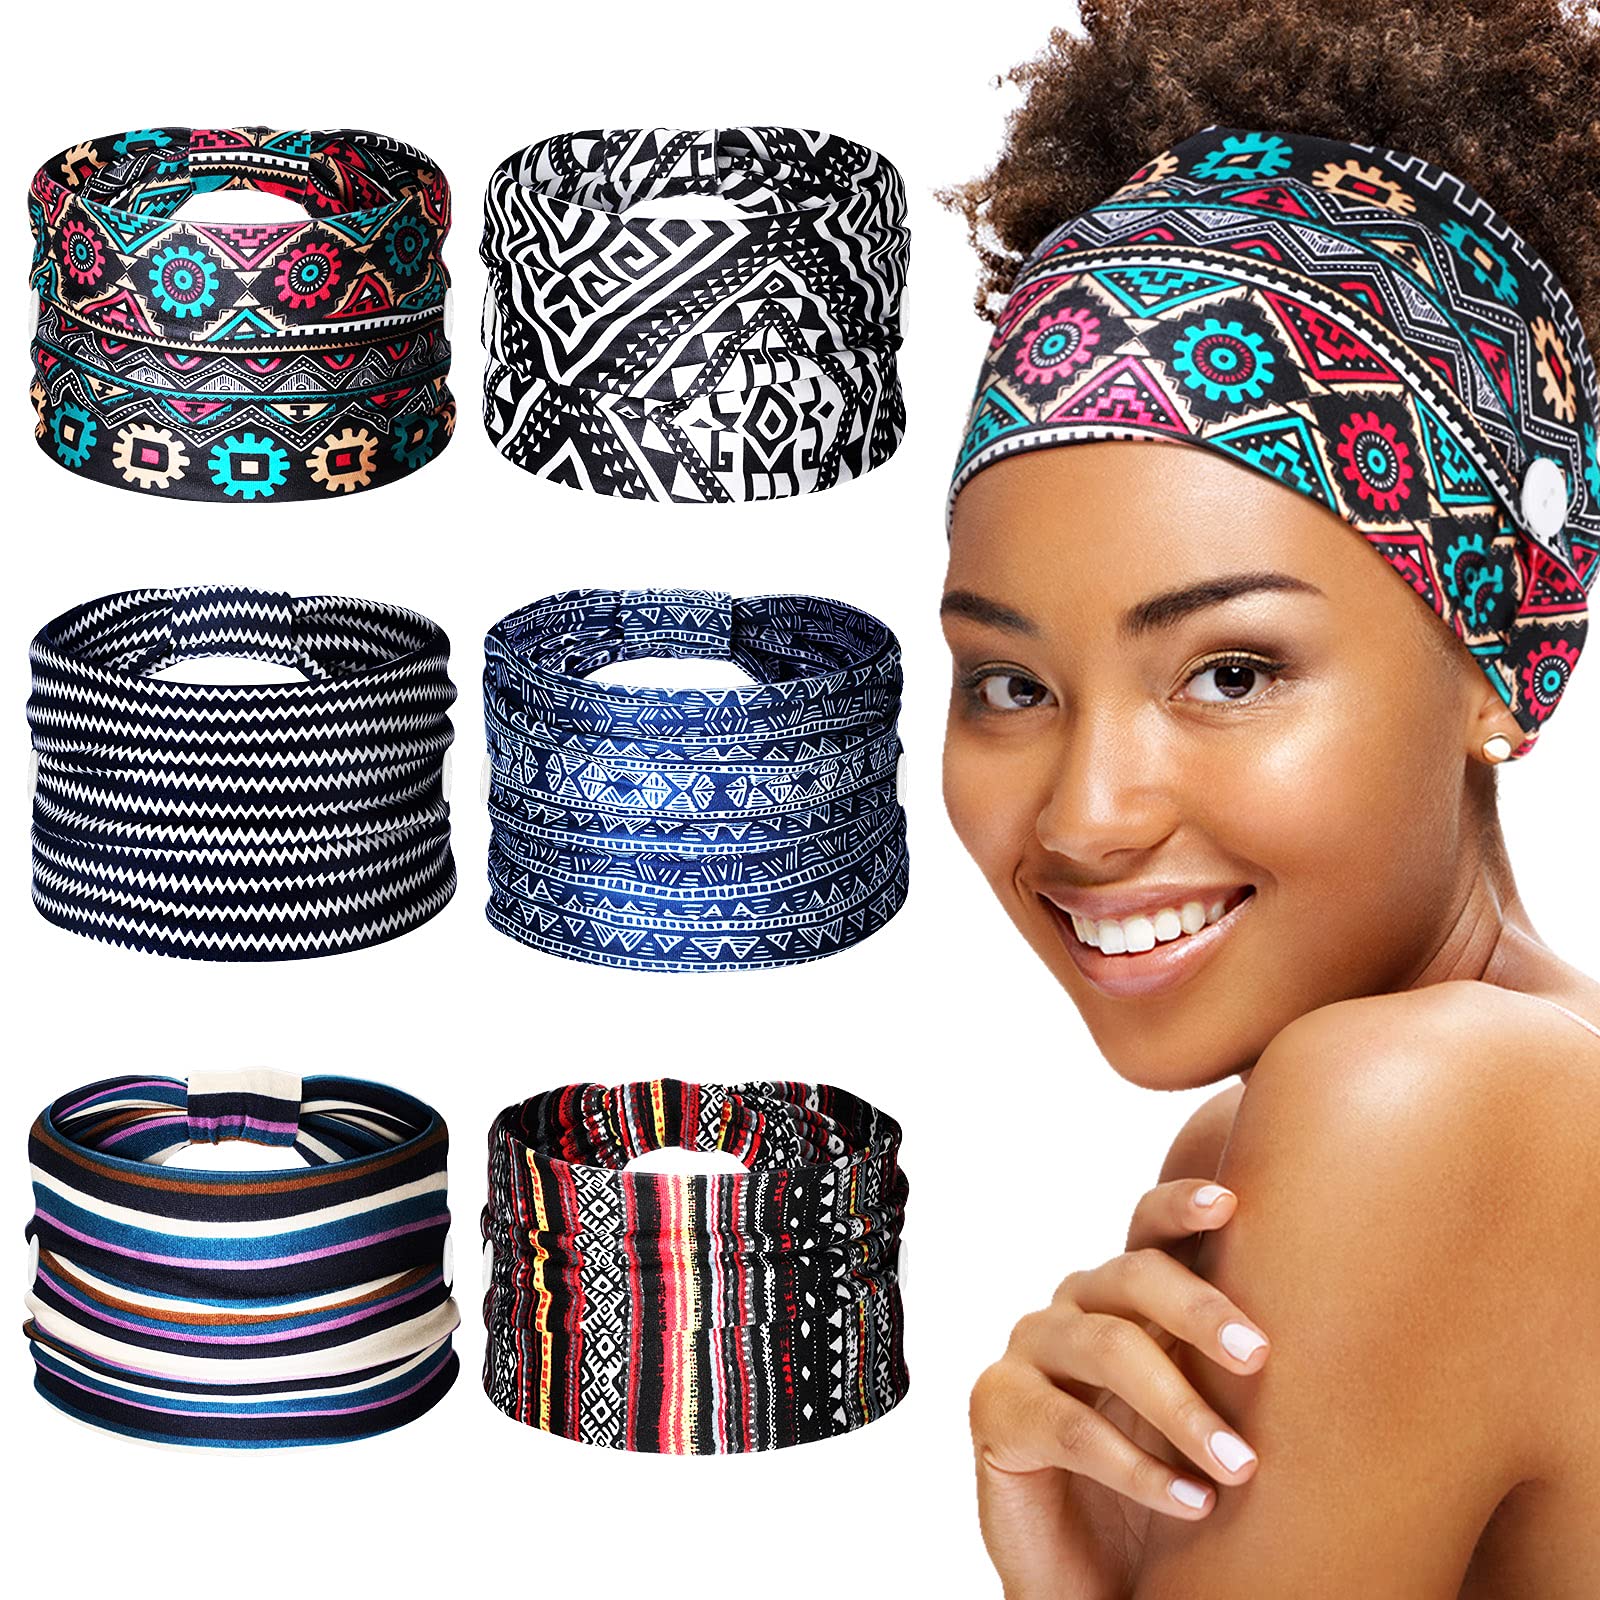 Chuangdi 6 Pieces Headband with Buttons African Headband Bobo Knot Turban  Wide Nurse Button Head Wraps Elastic Headbands Sport Beach Hair Accessories  for Women Girls (Bright Patterns) 